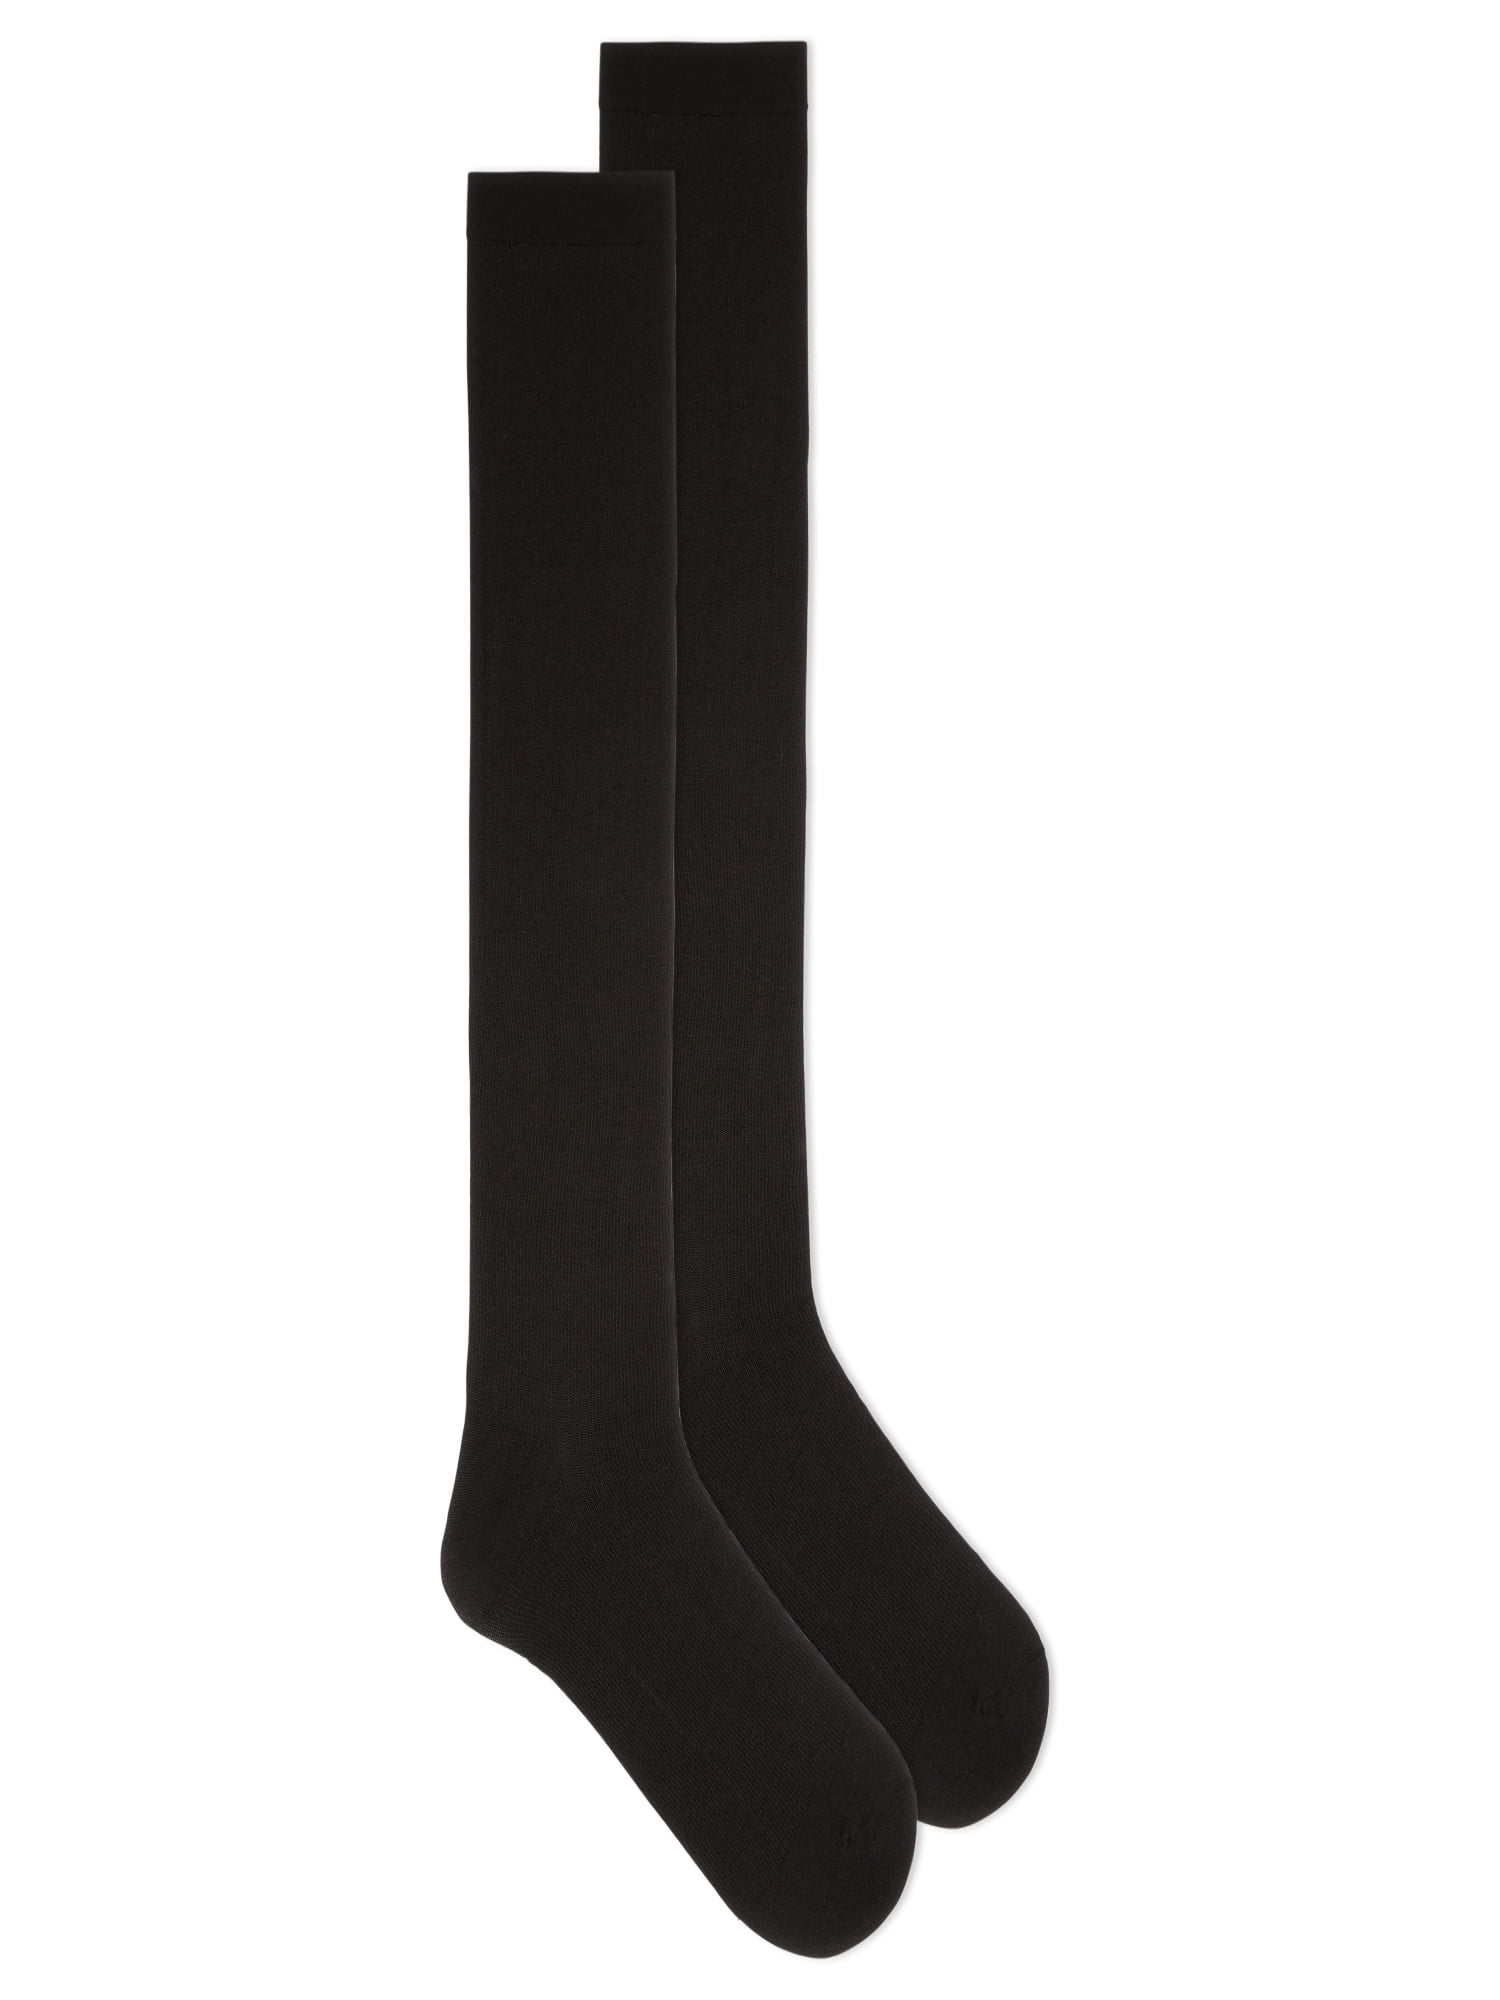 SMALL,MEDIUM,LARGE---Yoga stick-e socks 2 pairs per order flesh with blue trim 